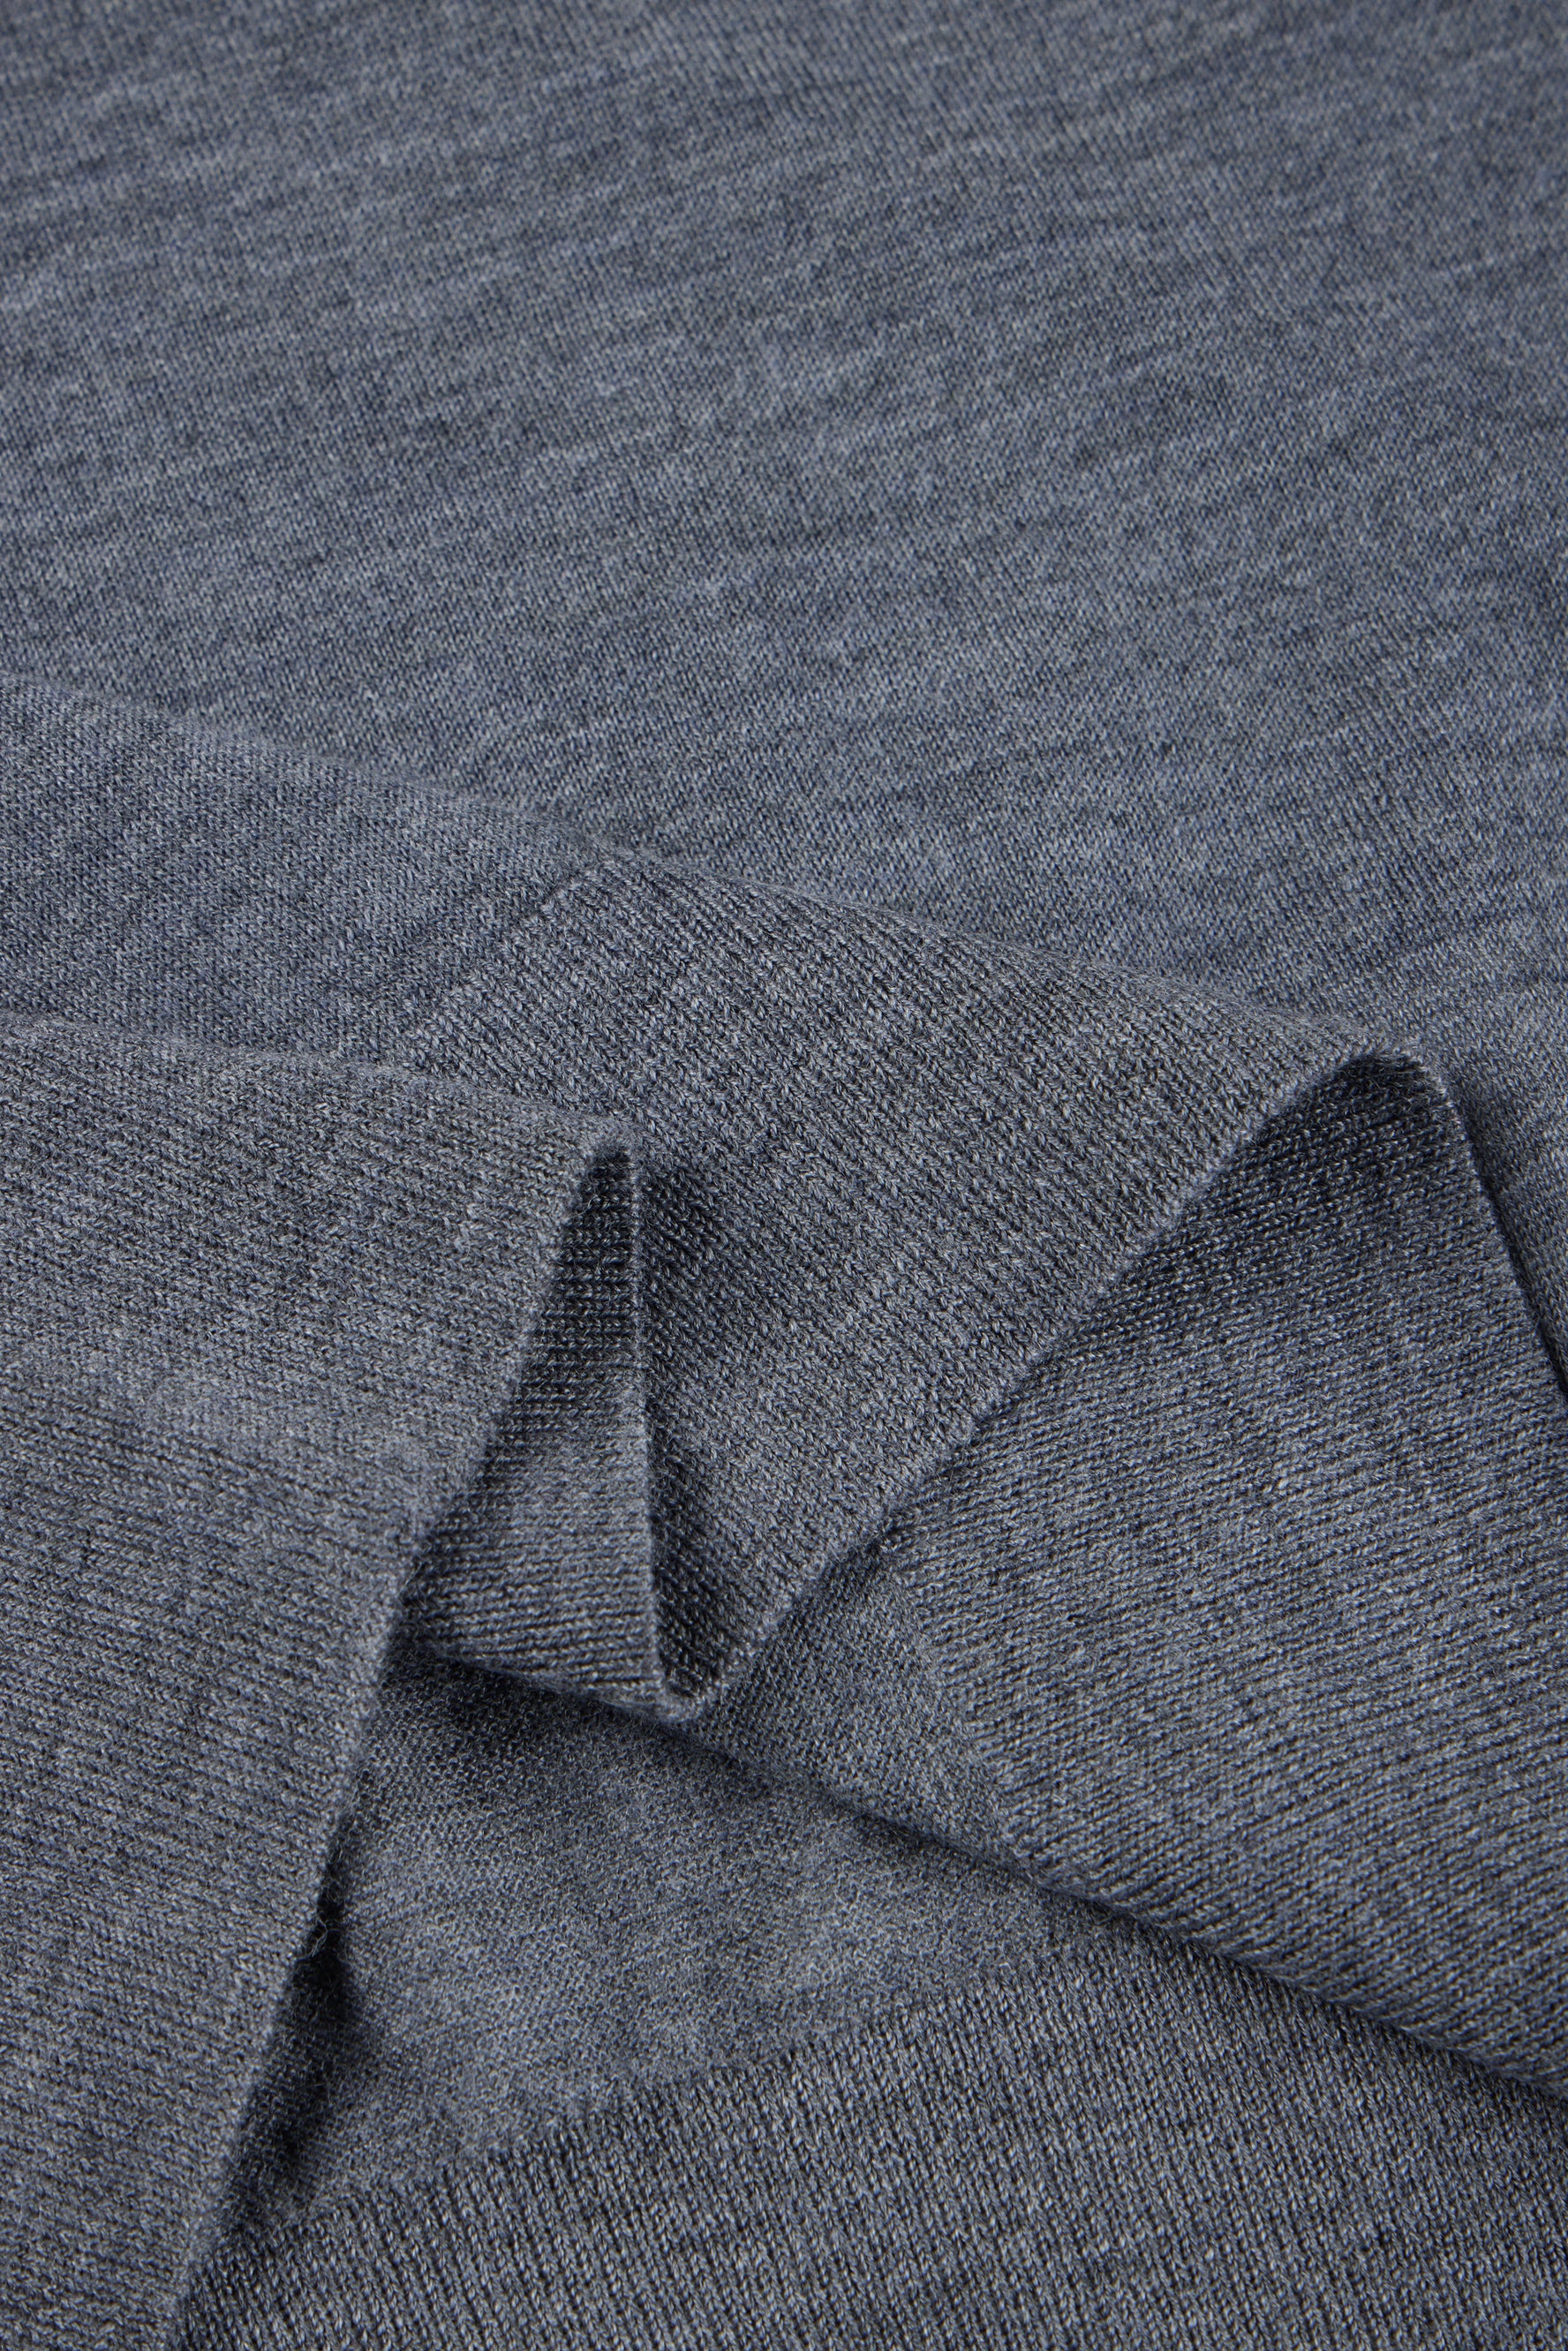 DIAMOND silk-blended sweater (Grey)